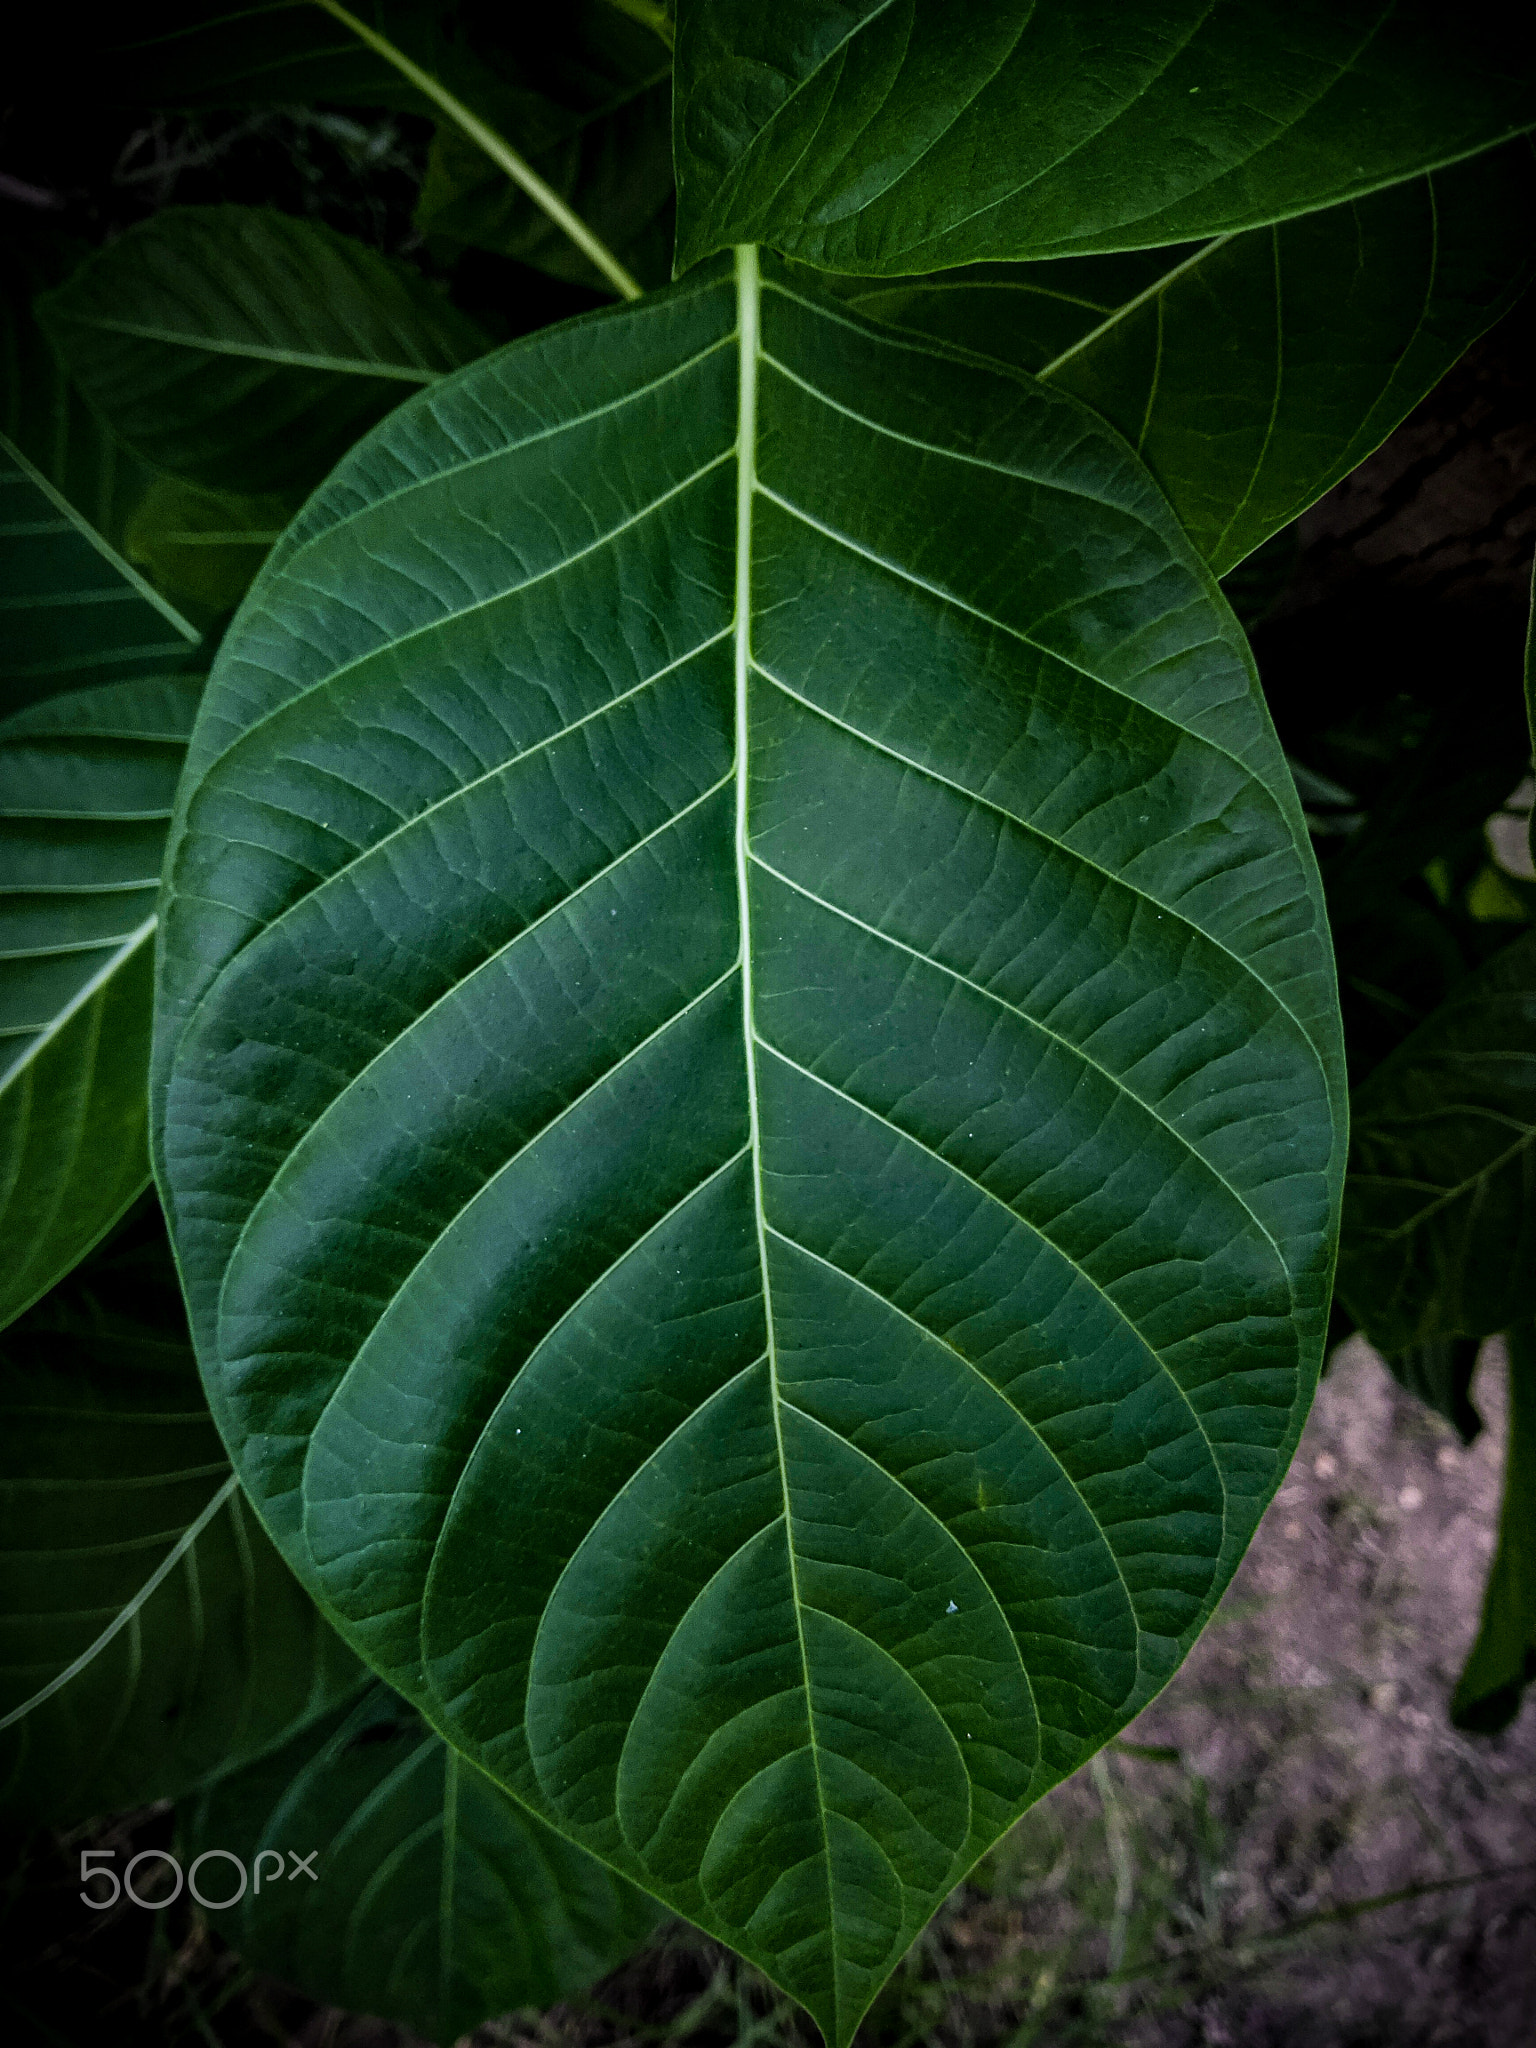 A big green leaf with veins.